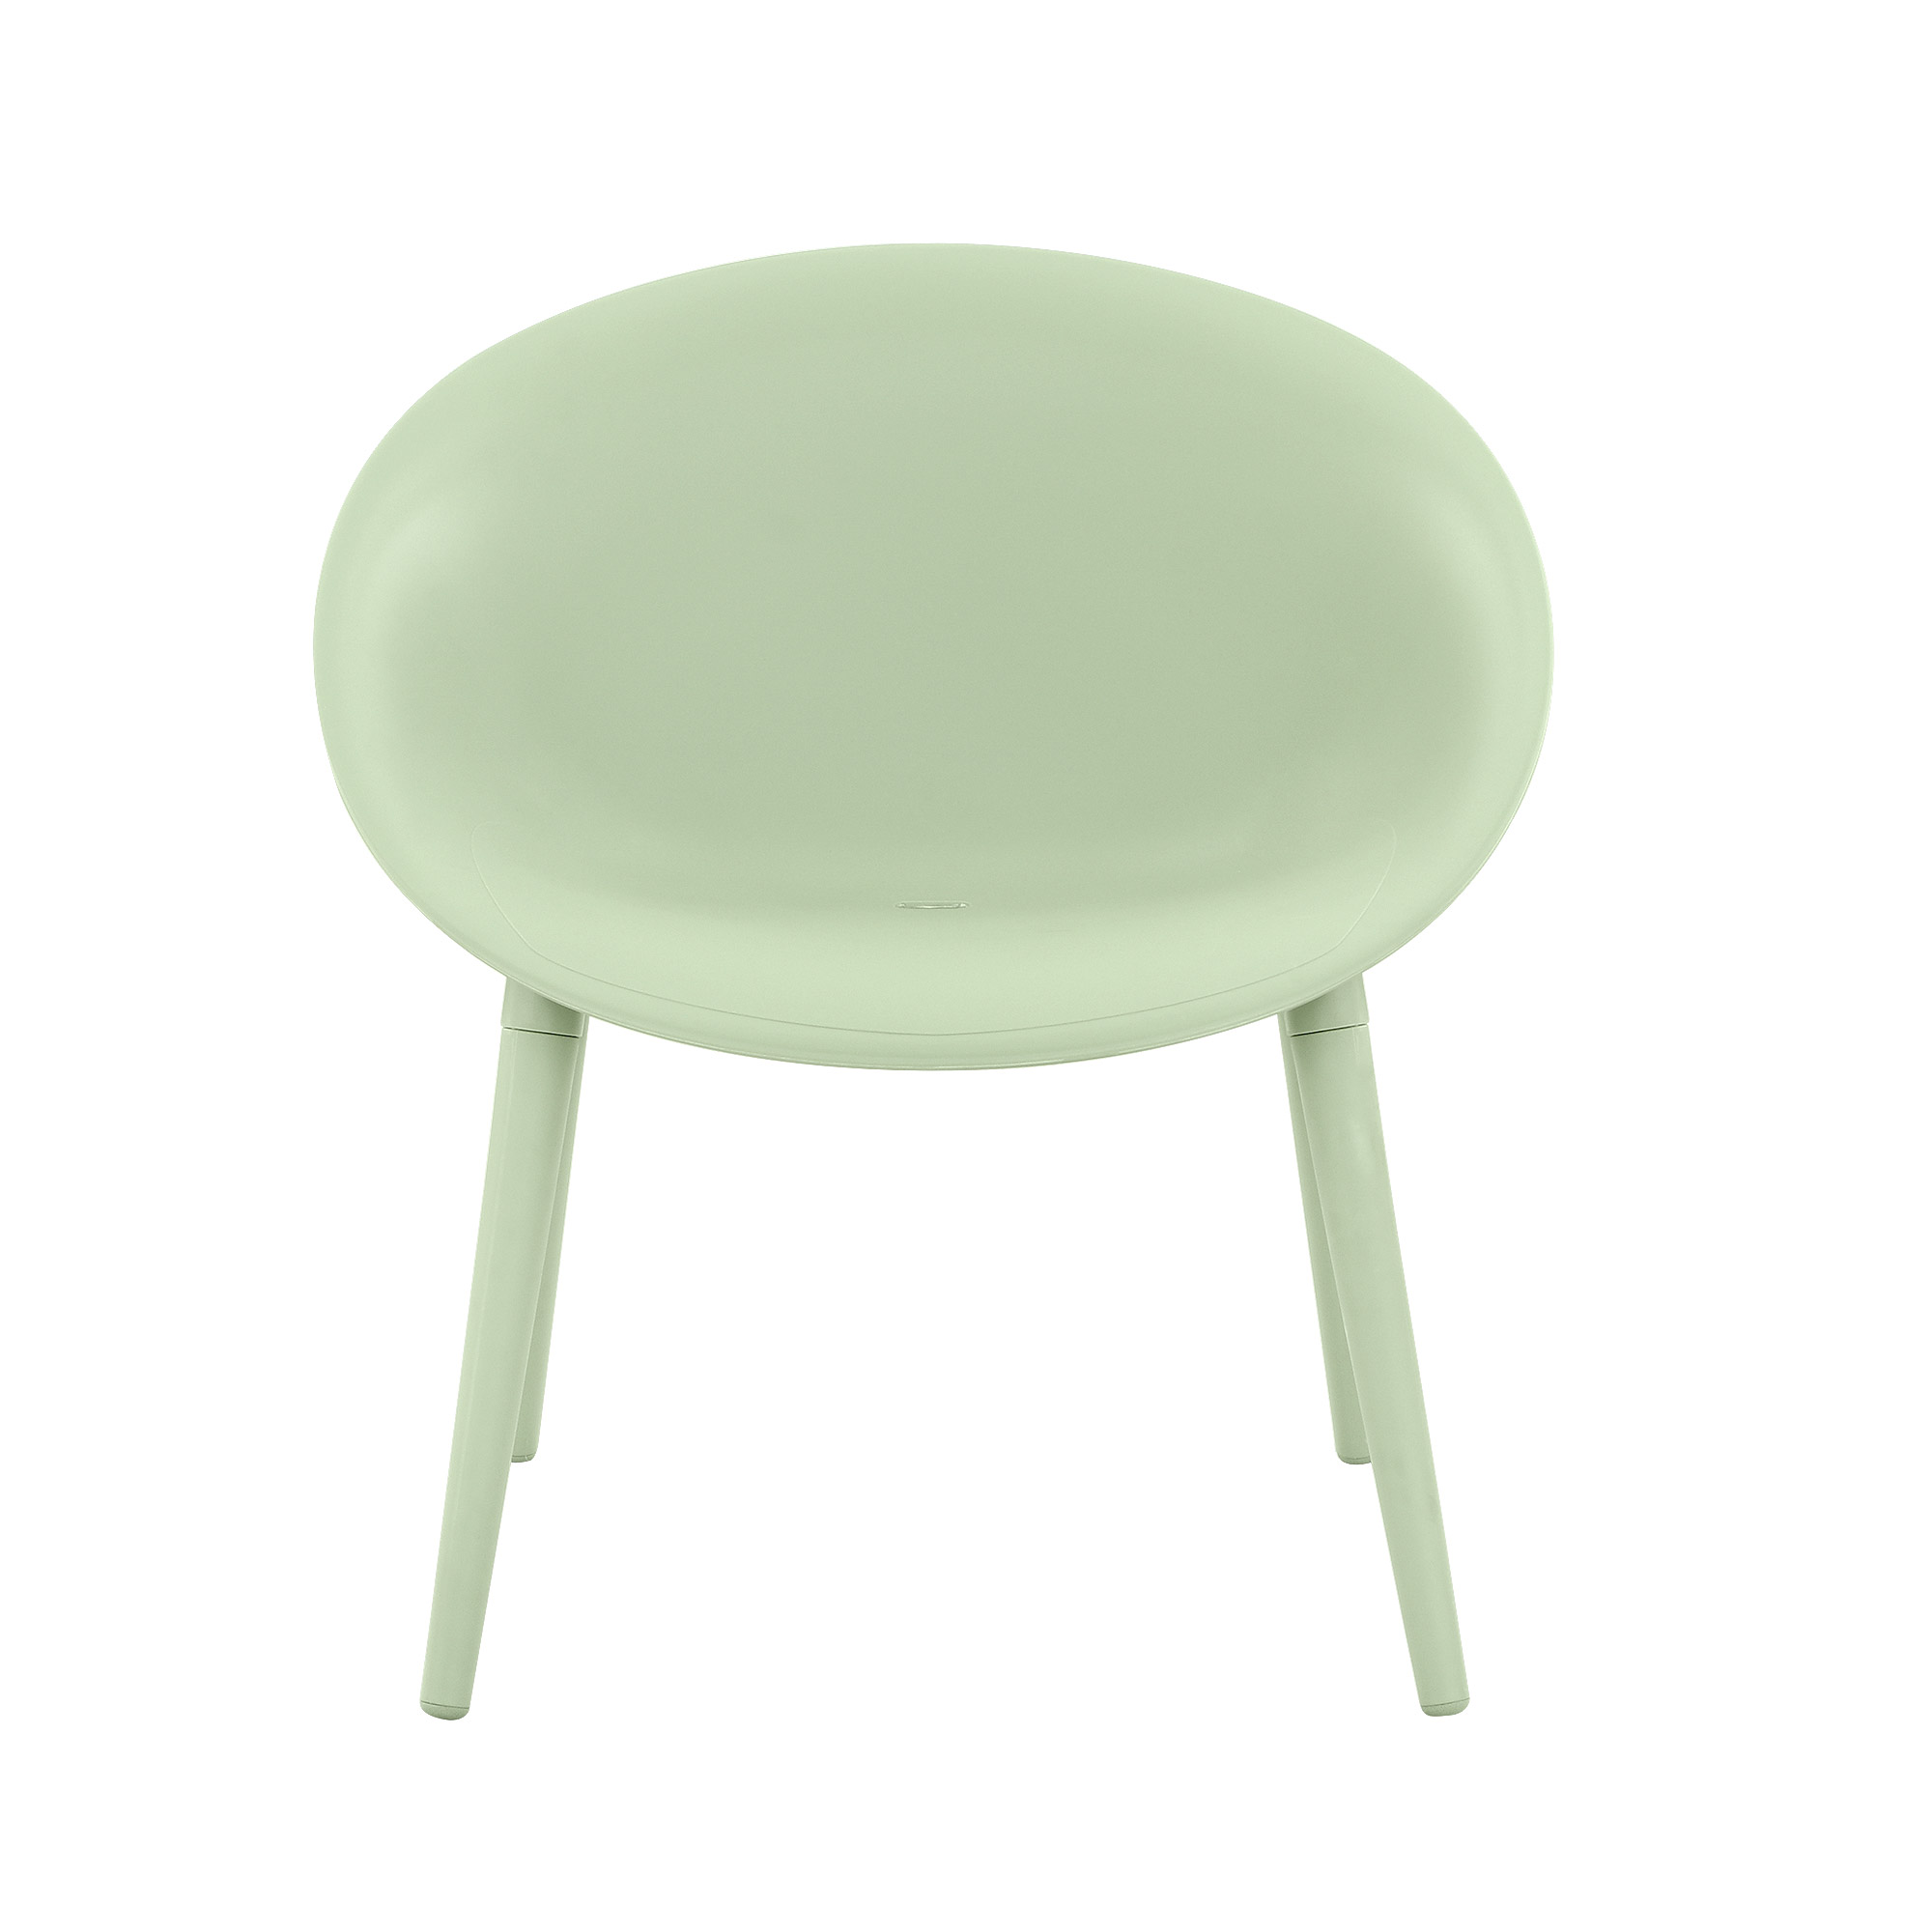 Комплект мебели Kaemingk furniture Marbella стол/2стула зеленые, цвет зеленый, размер 50х50х45 см - фото 3